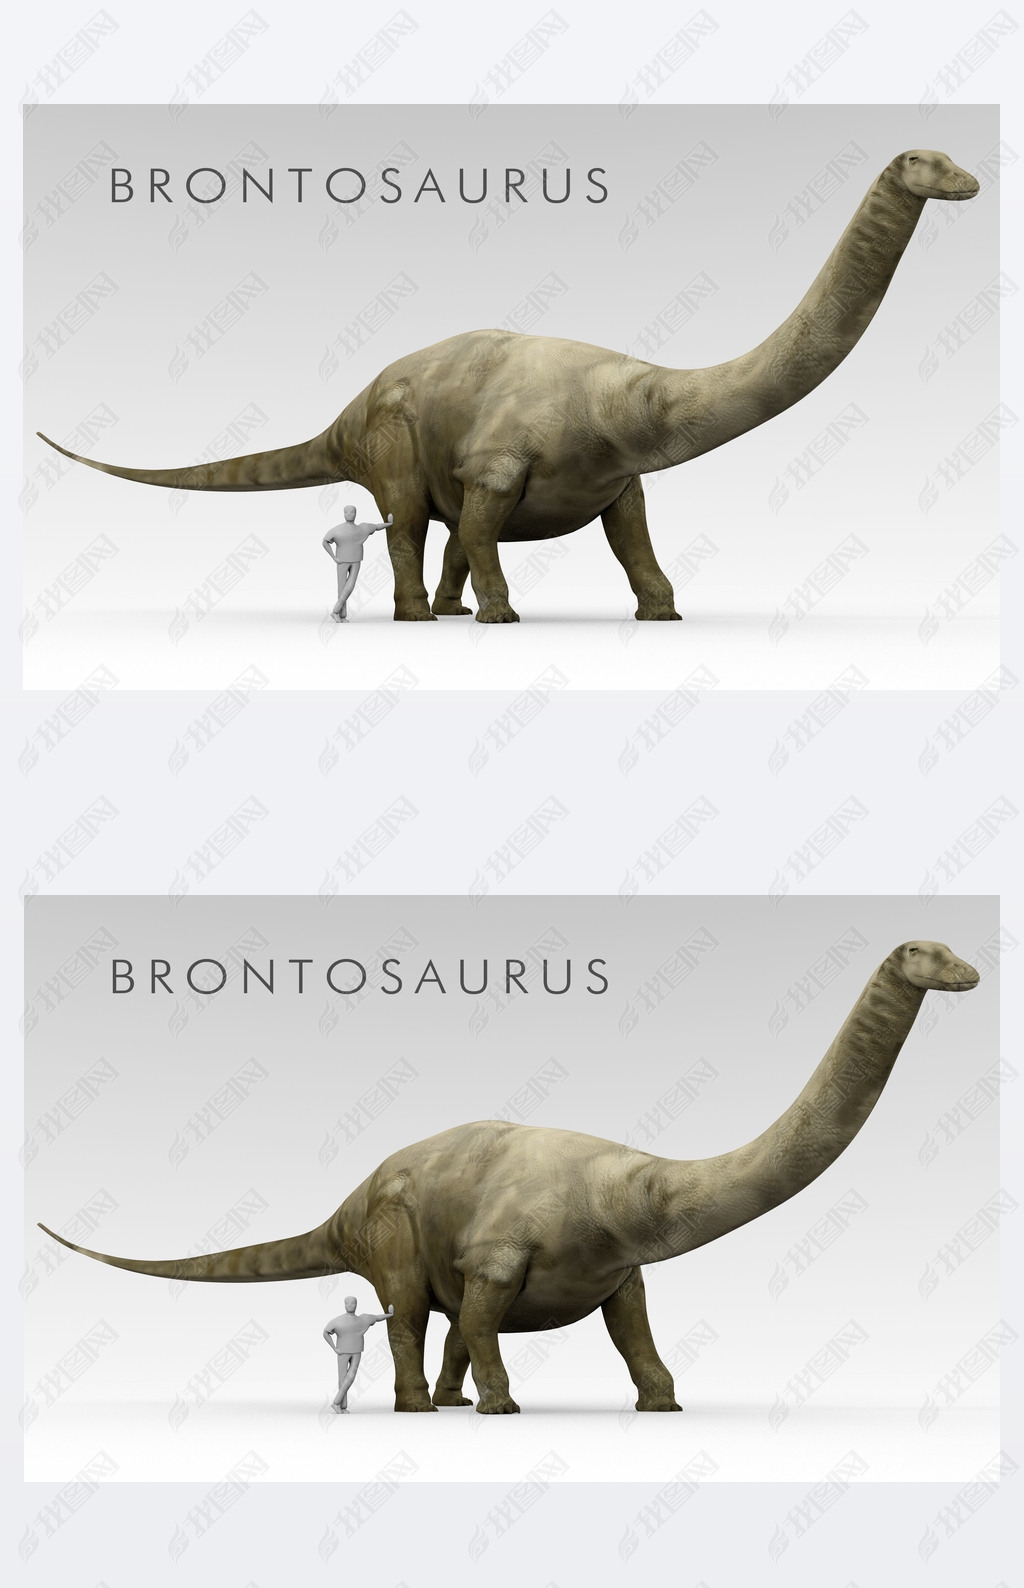 Dinosaur Apatosaurus And Human Size Comparison